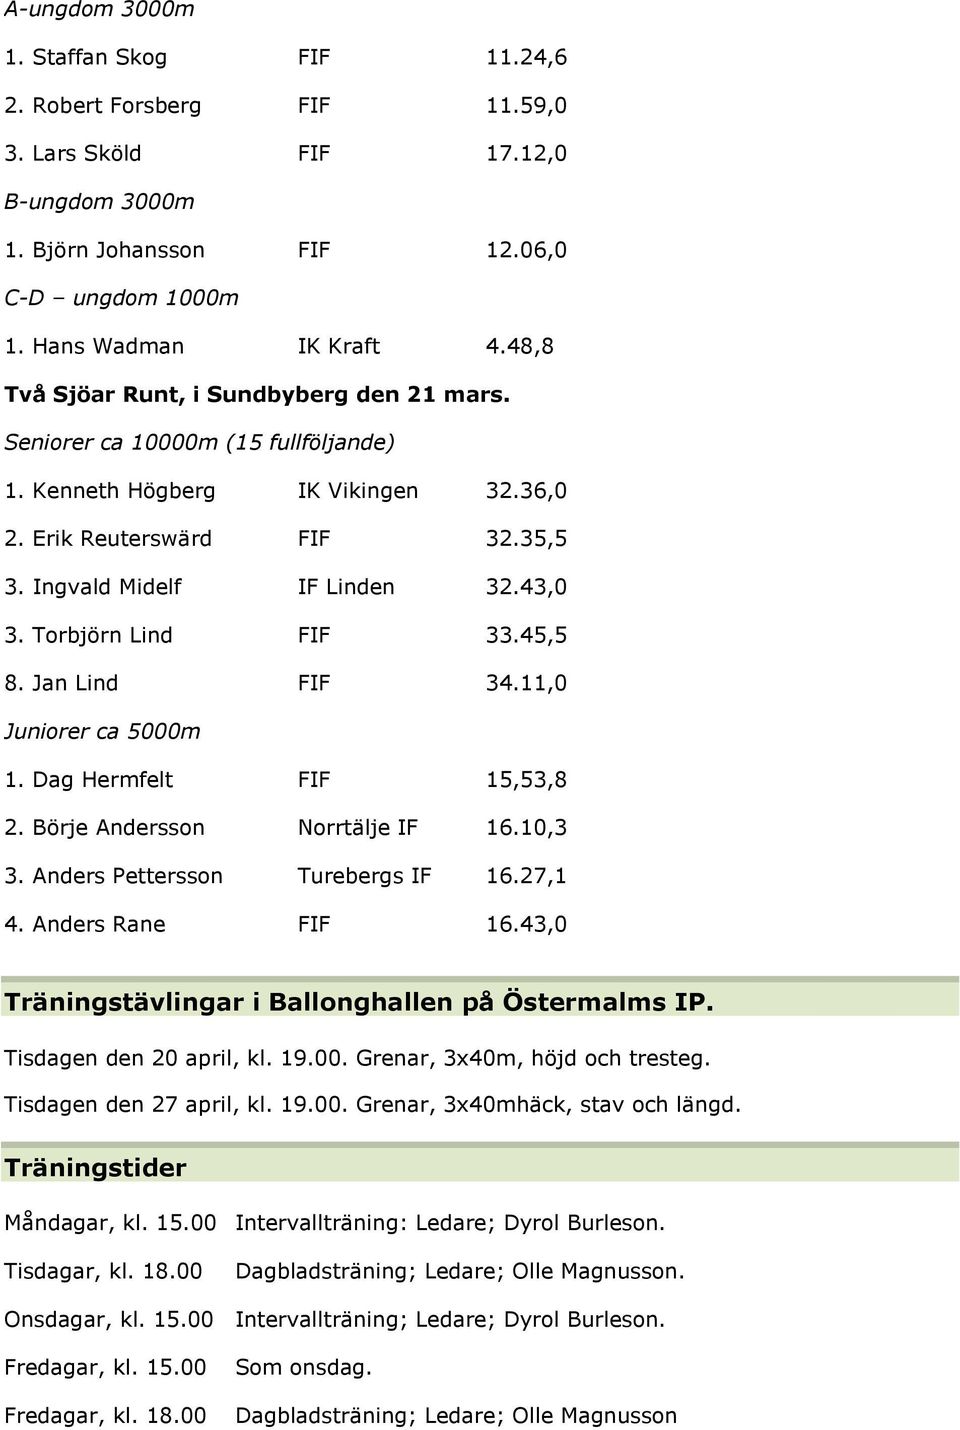 Torbjörn Lind FIF 33.45,5 8. Jan Lind FIF 34.11,0 Juniorer ca 5000m 1. Dag Hermfelt FIF 15,53,8 2. Börje Andersson Norrtälje IF 16.10,3 3. Anders Pettersson Turebergs IF 16.27,1 4. Anders Rane FIF 16.